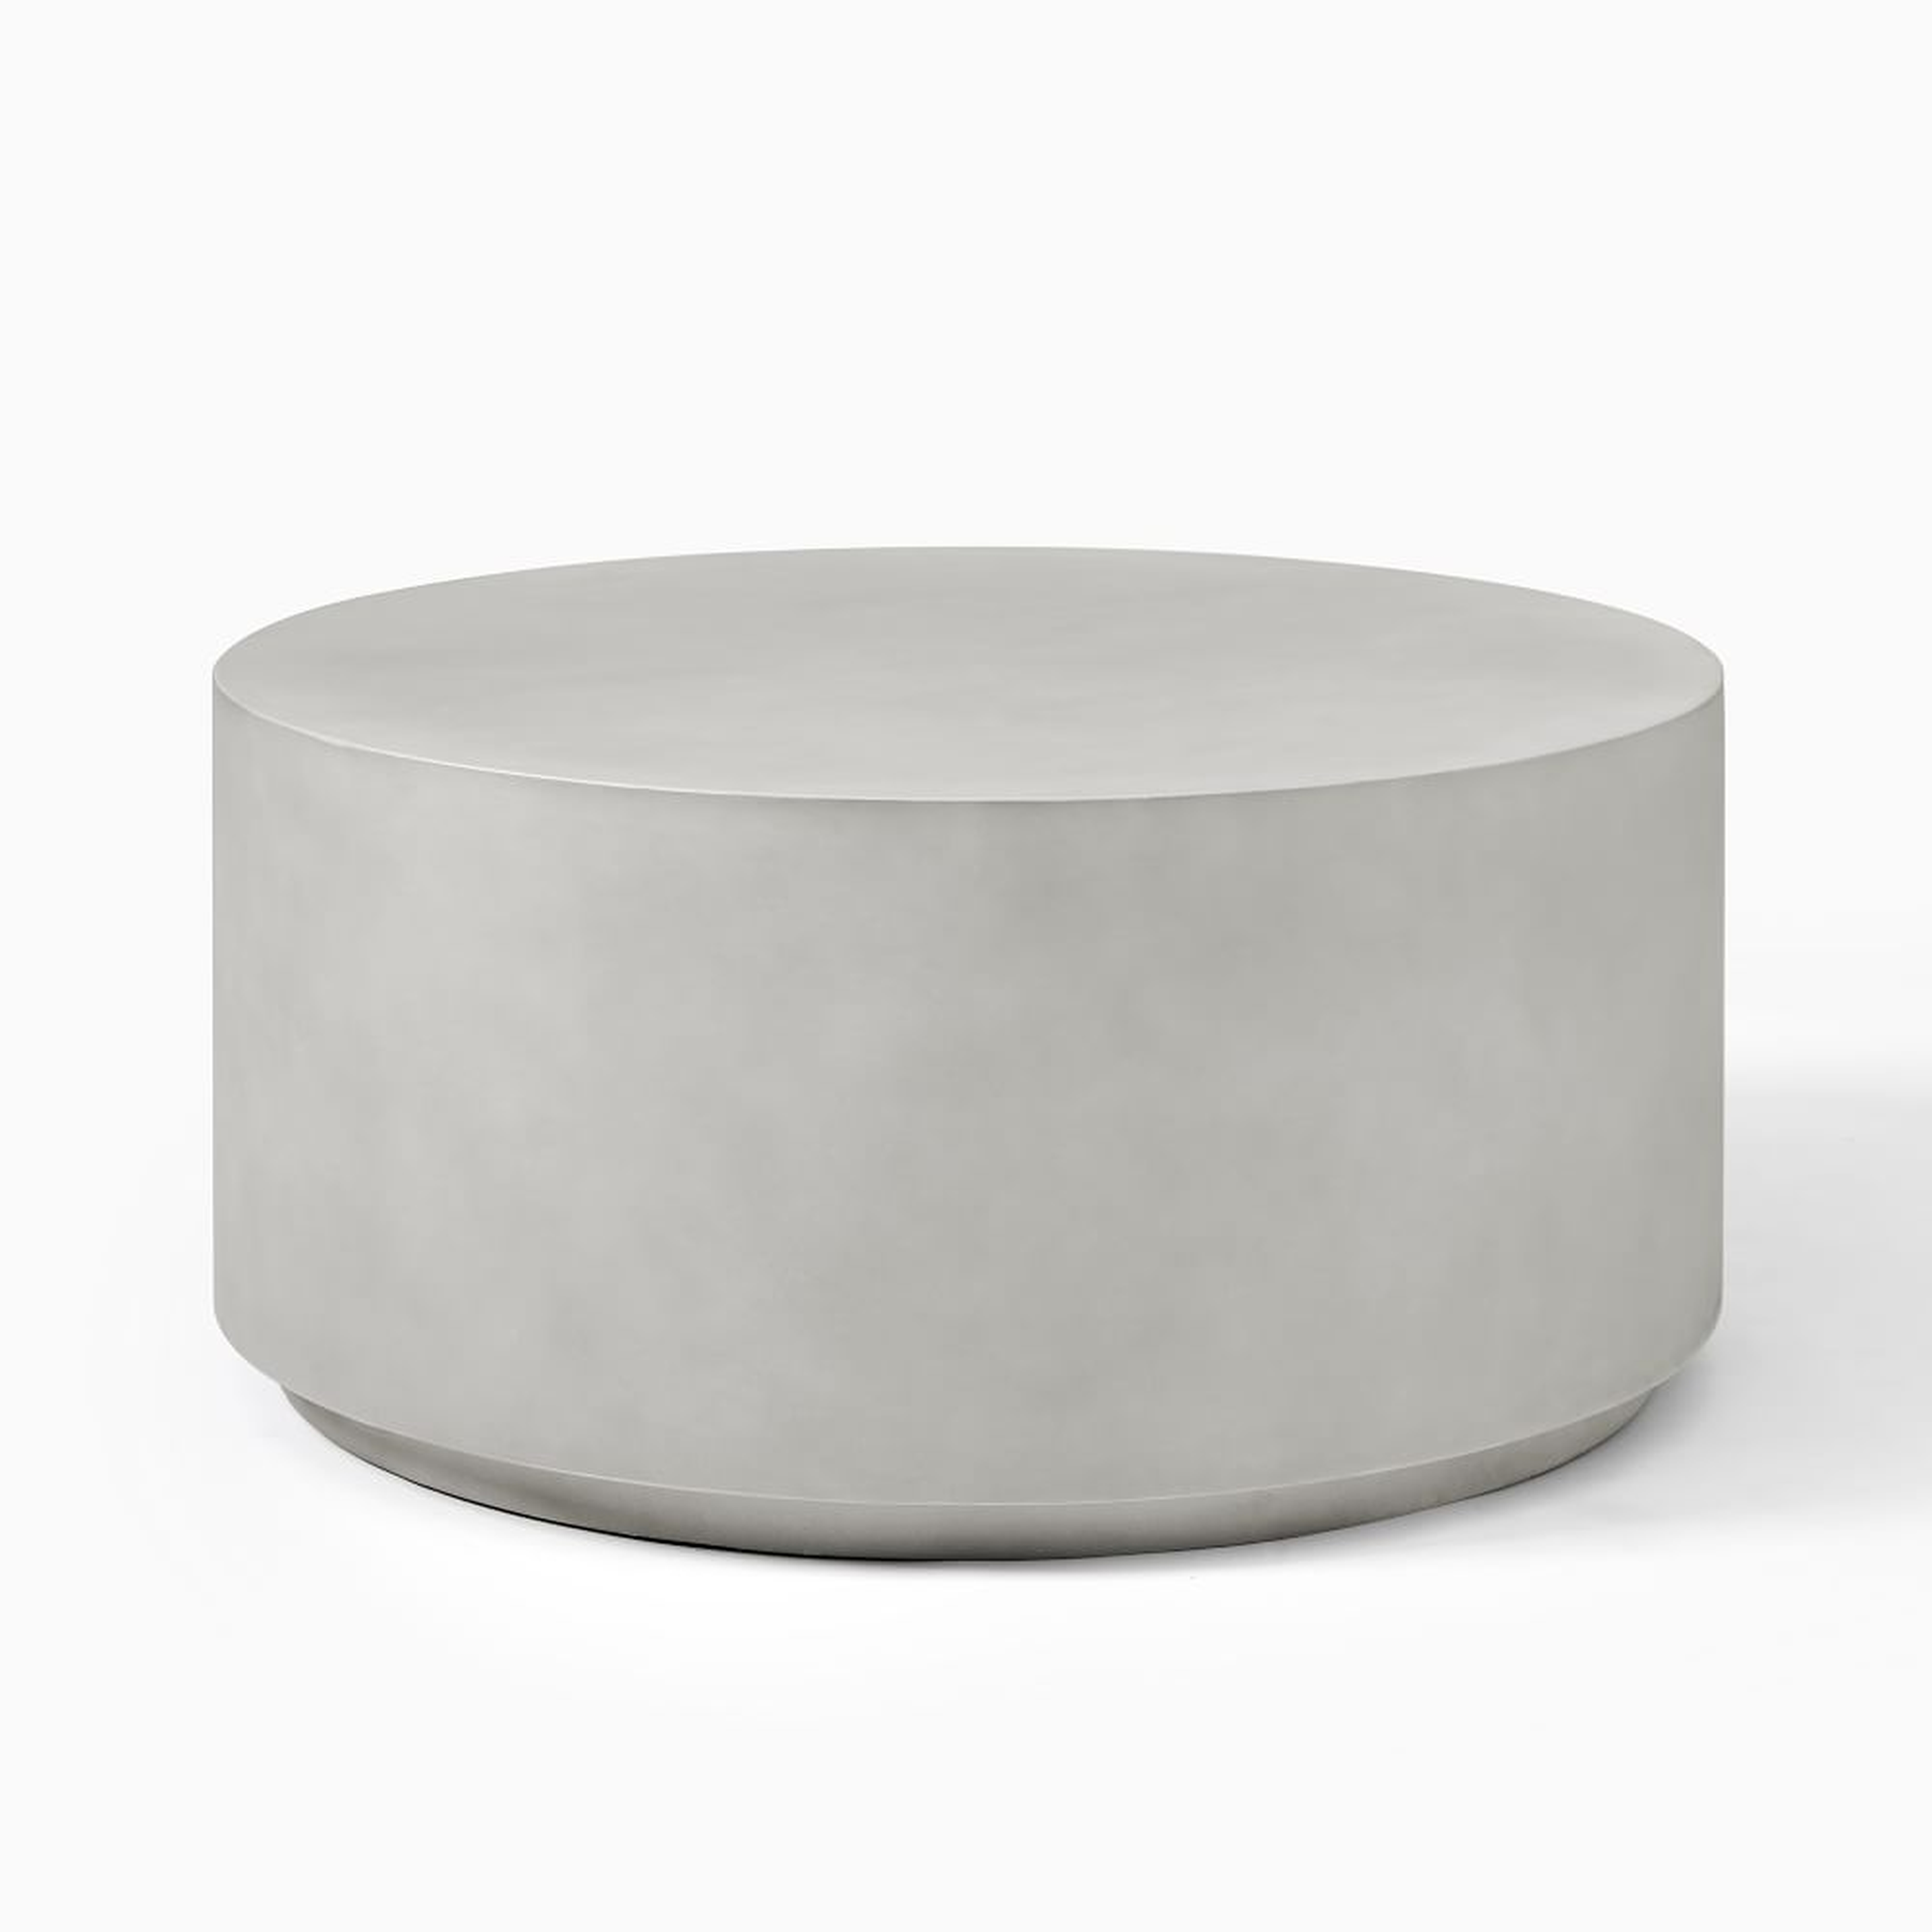 Drum Coffee Table, 36", Concrete - West Elm